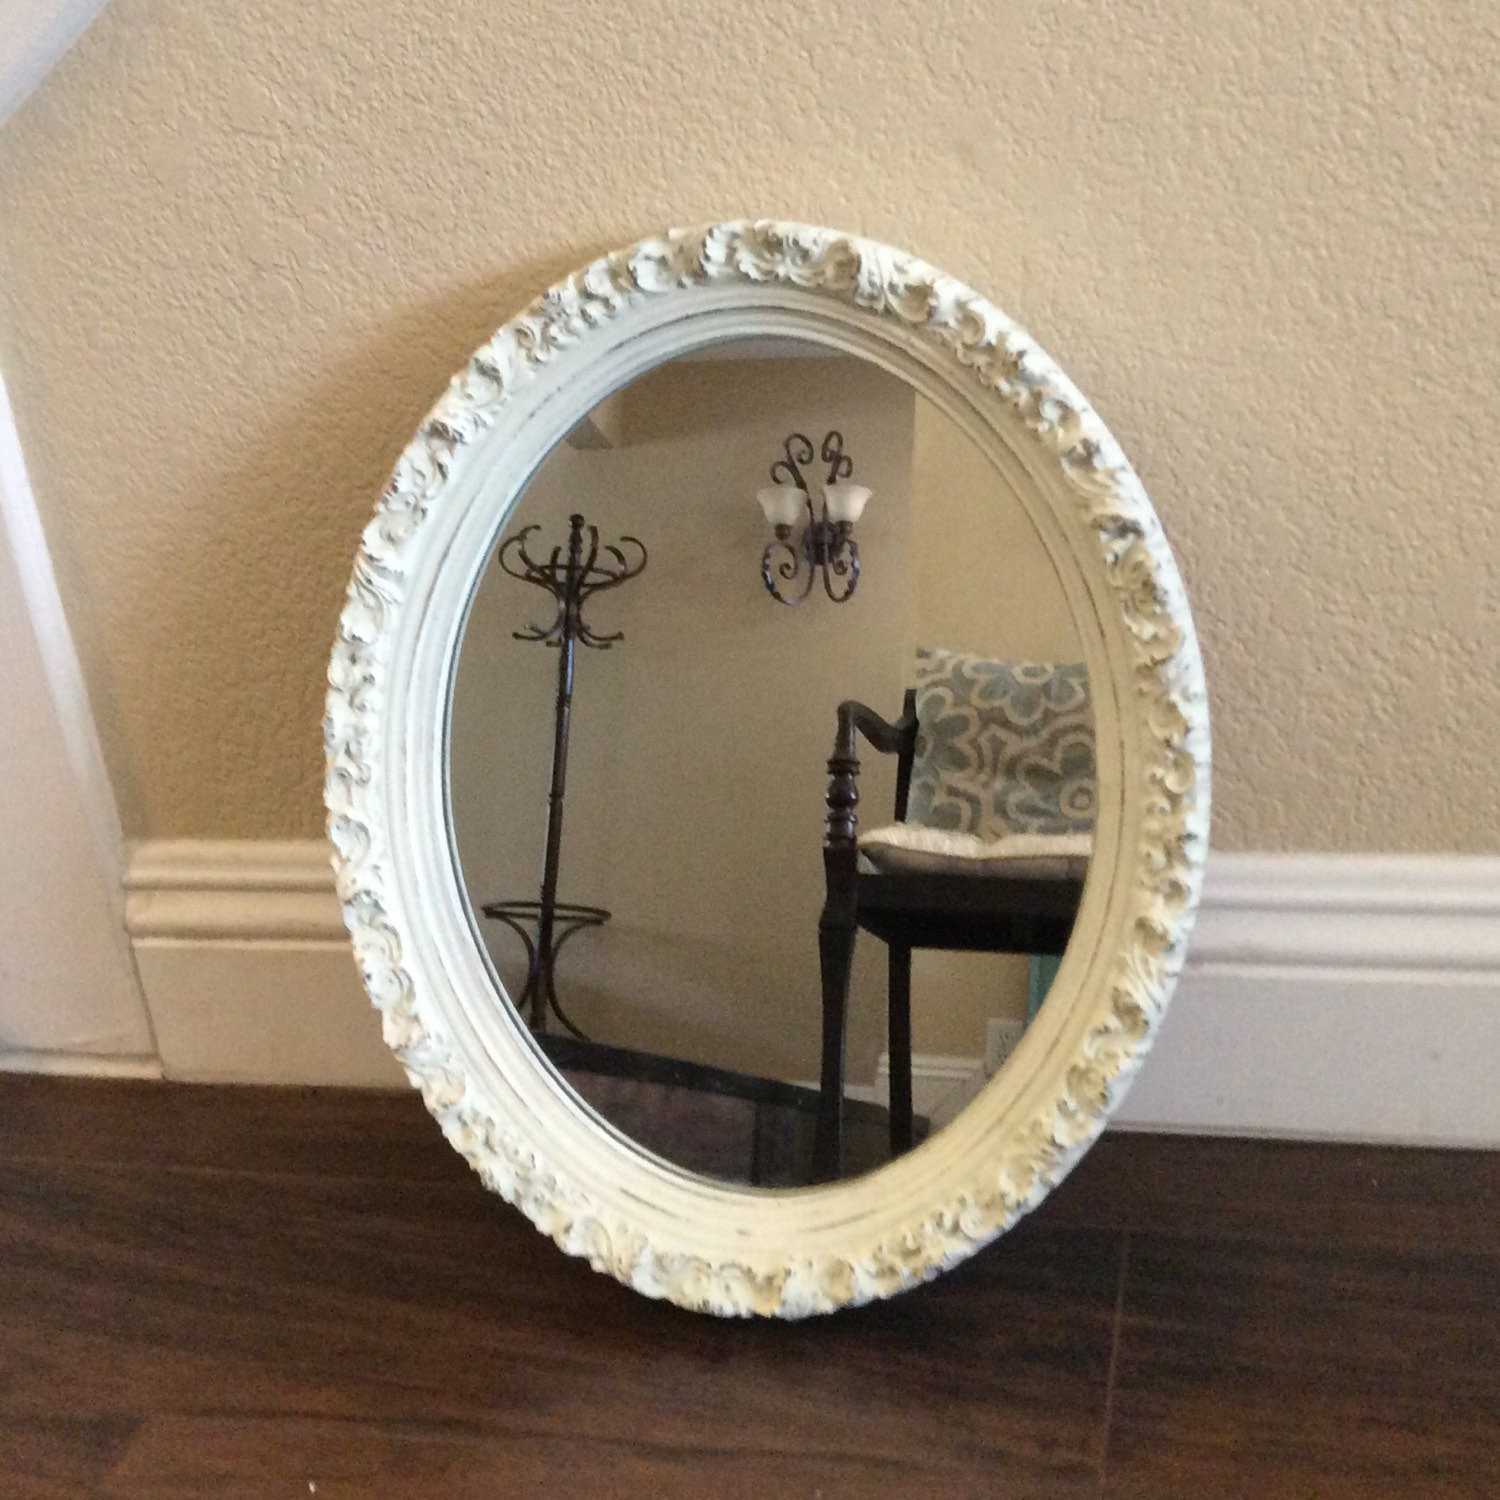 Small Oval Bathroom Mirror
 PRETTY OVAL MIRROR White Mirror Ornate Framed Mirror Nursery